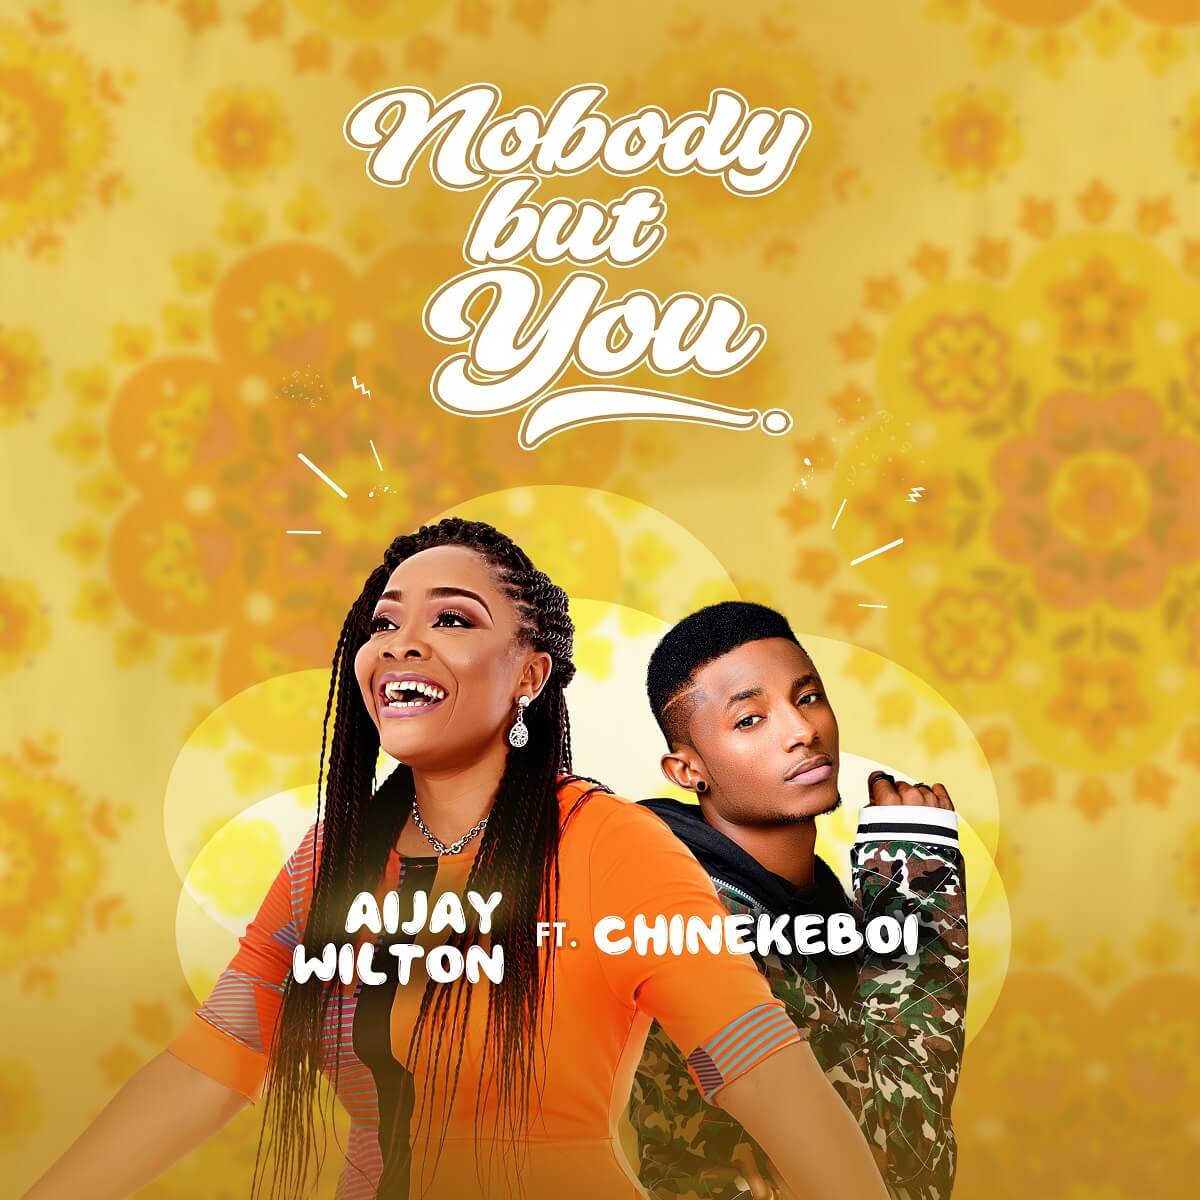  Nobody-But-You-Aijay-Wilton-ft-Chinekeboi